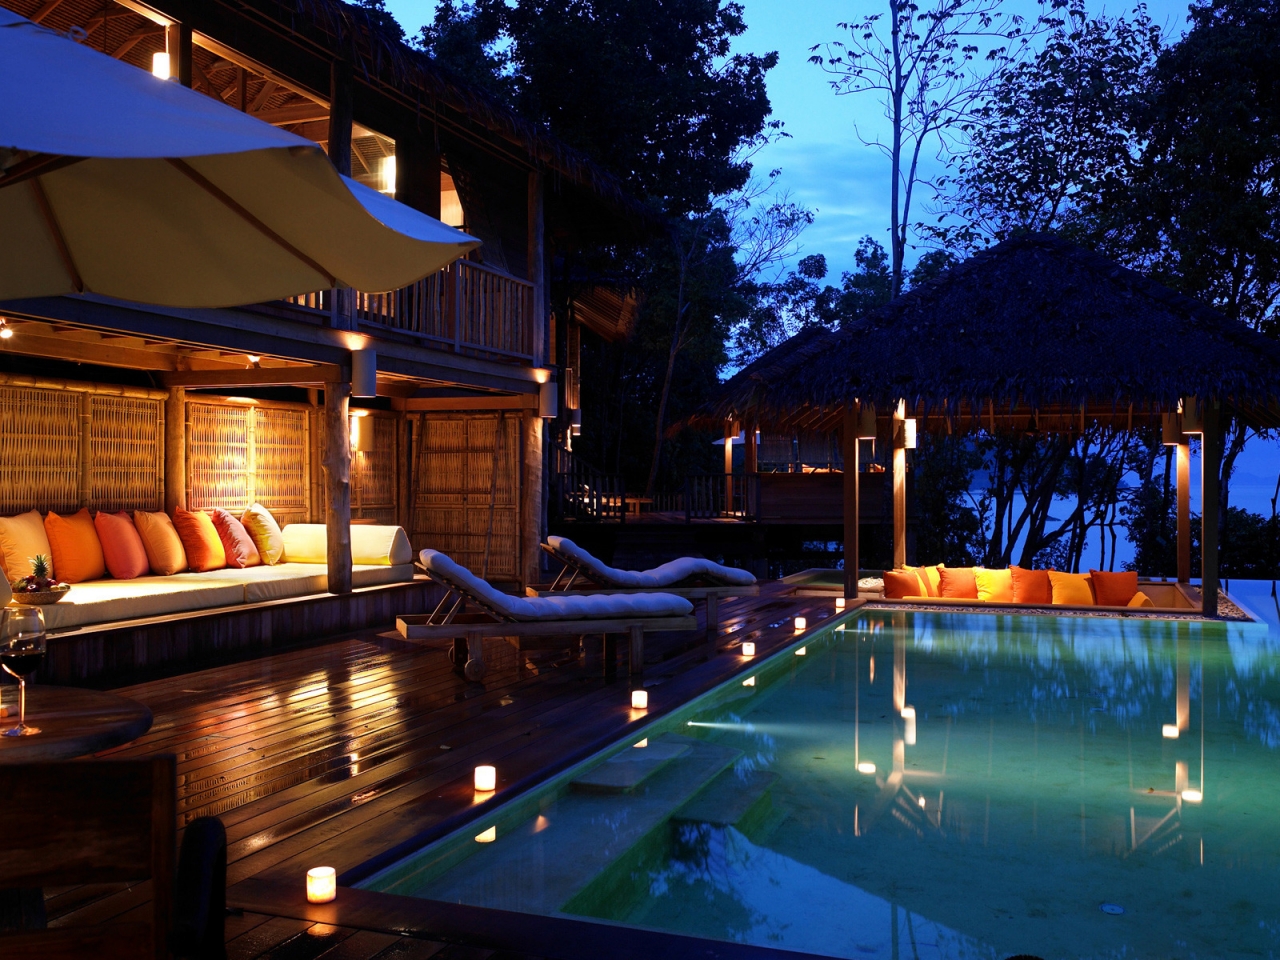 Luxury Sea Resort for 1280 x 960 resolution